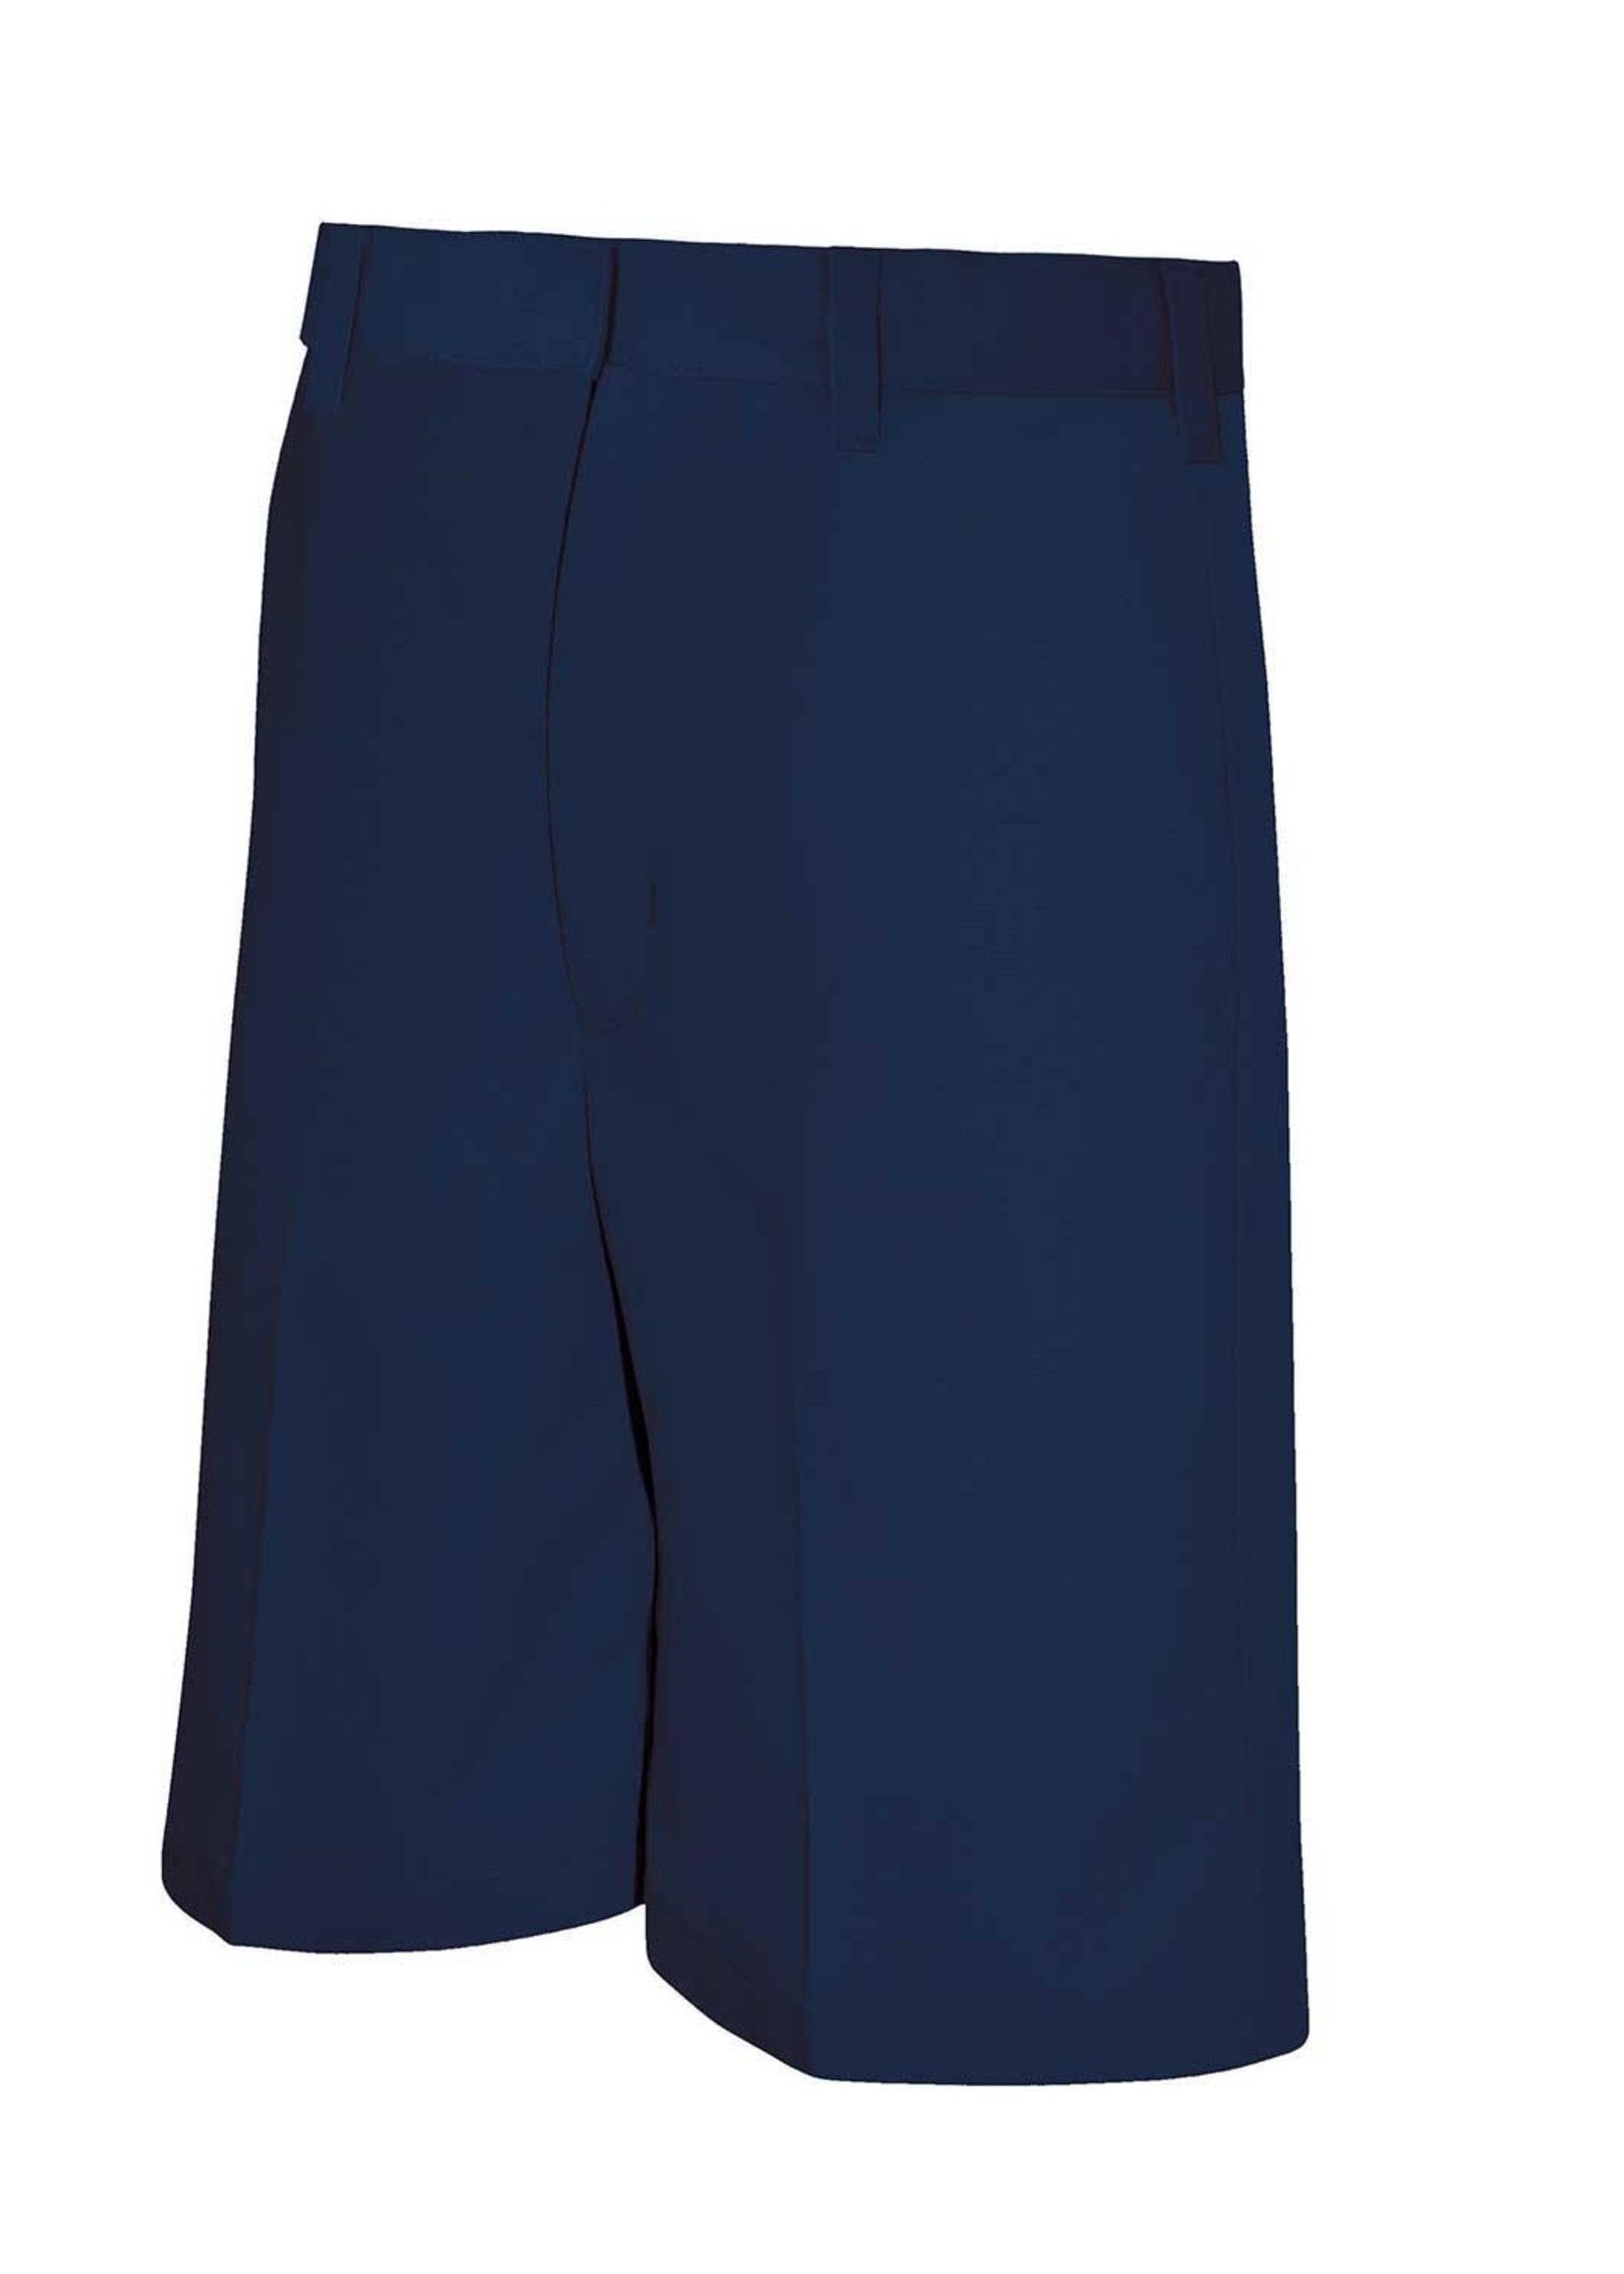 Boys Navy Flat Front Shorts with logo